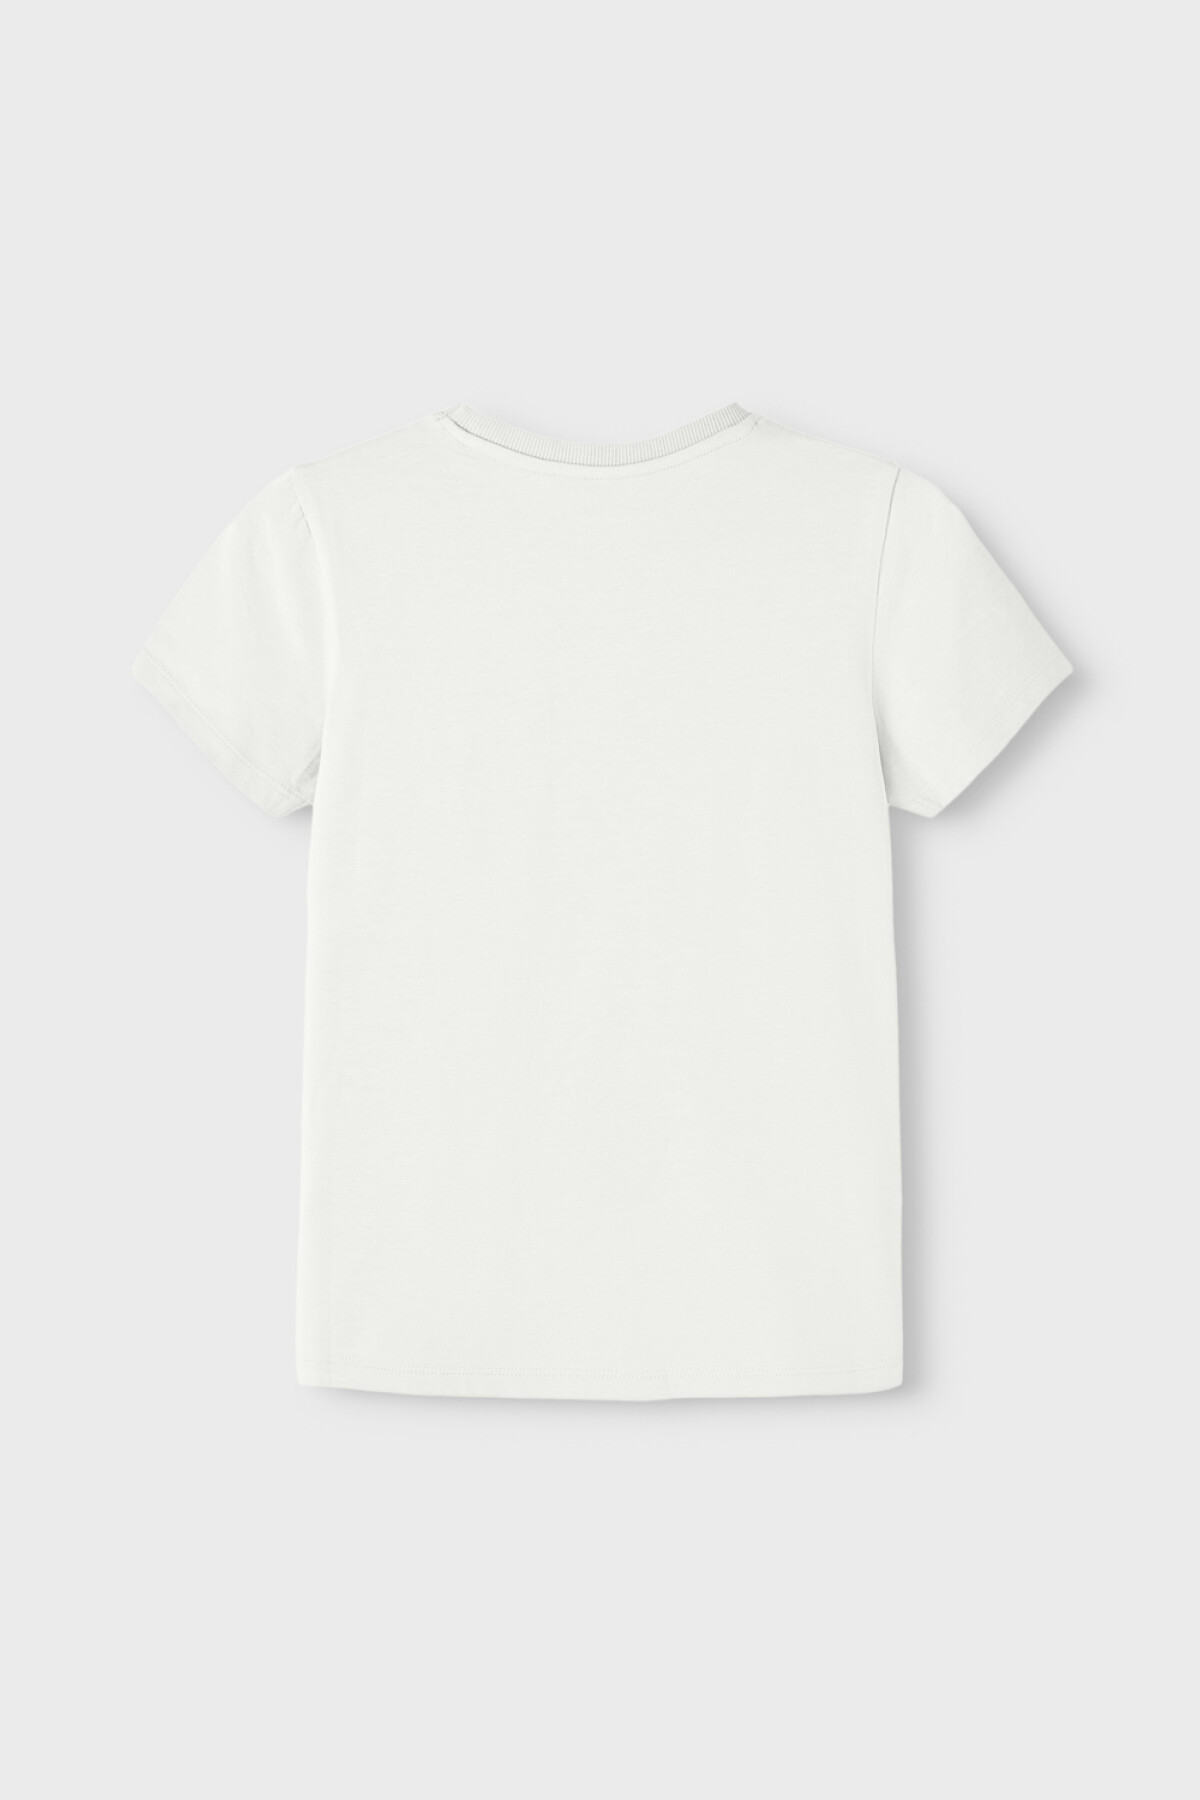 Camiseta Jabber Bright White